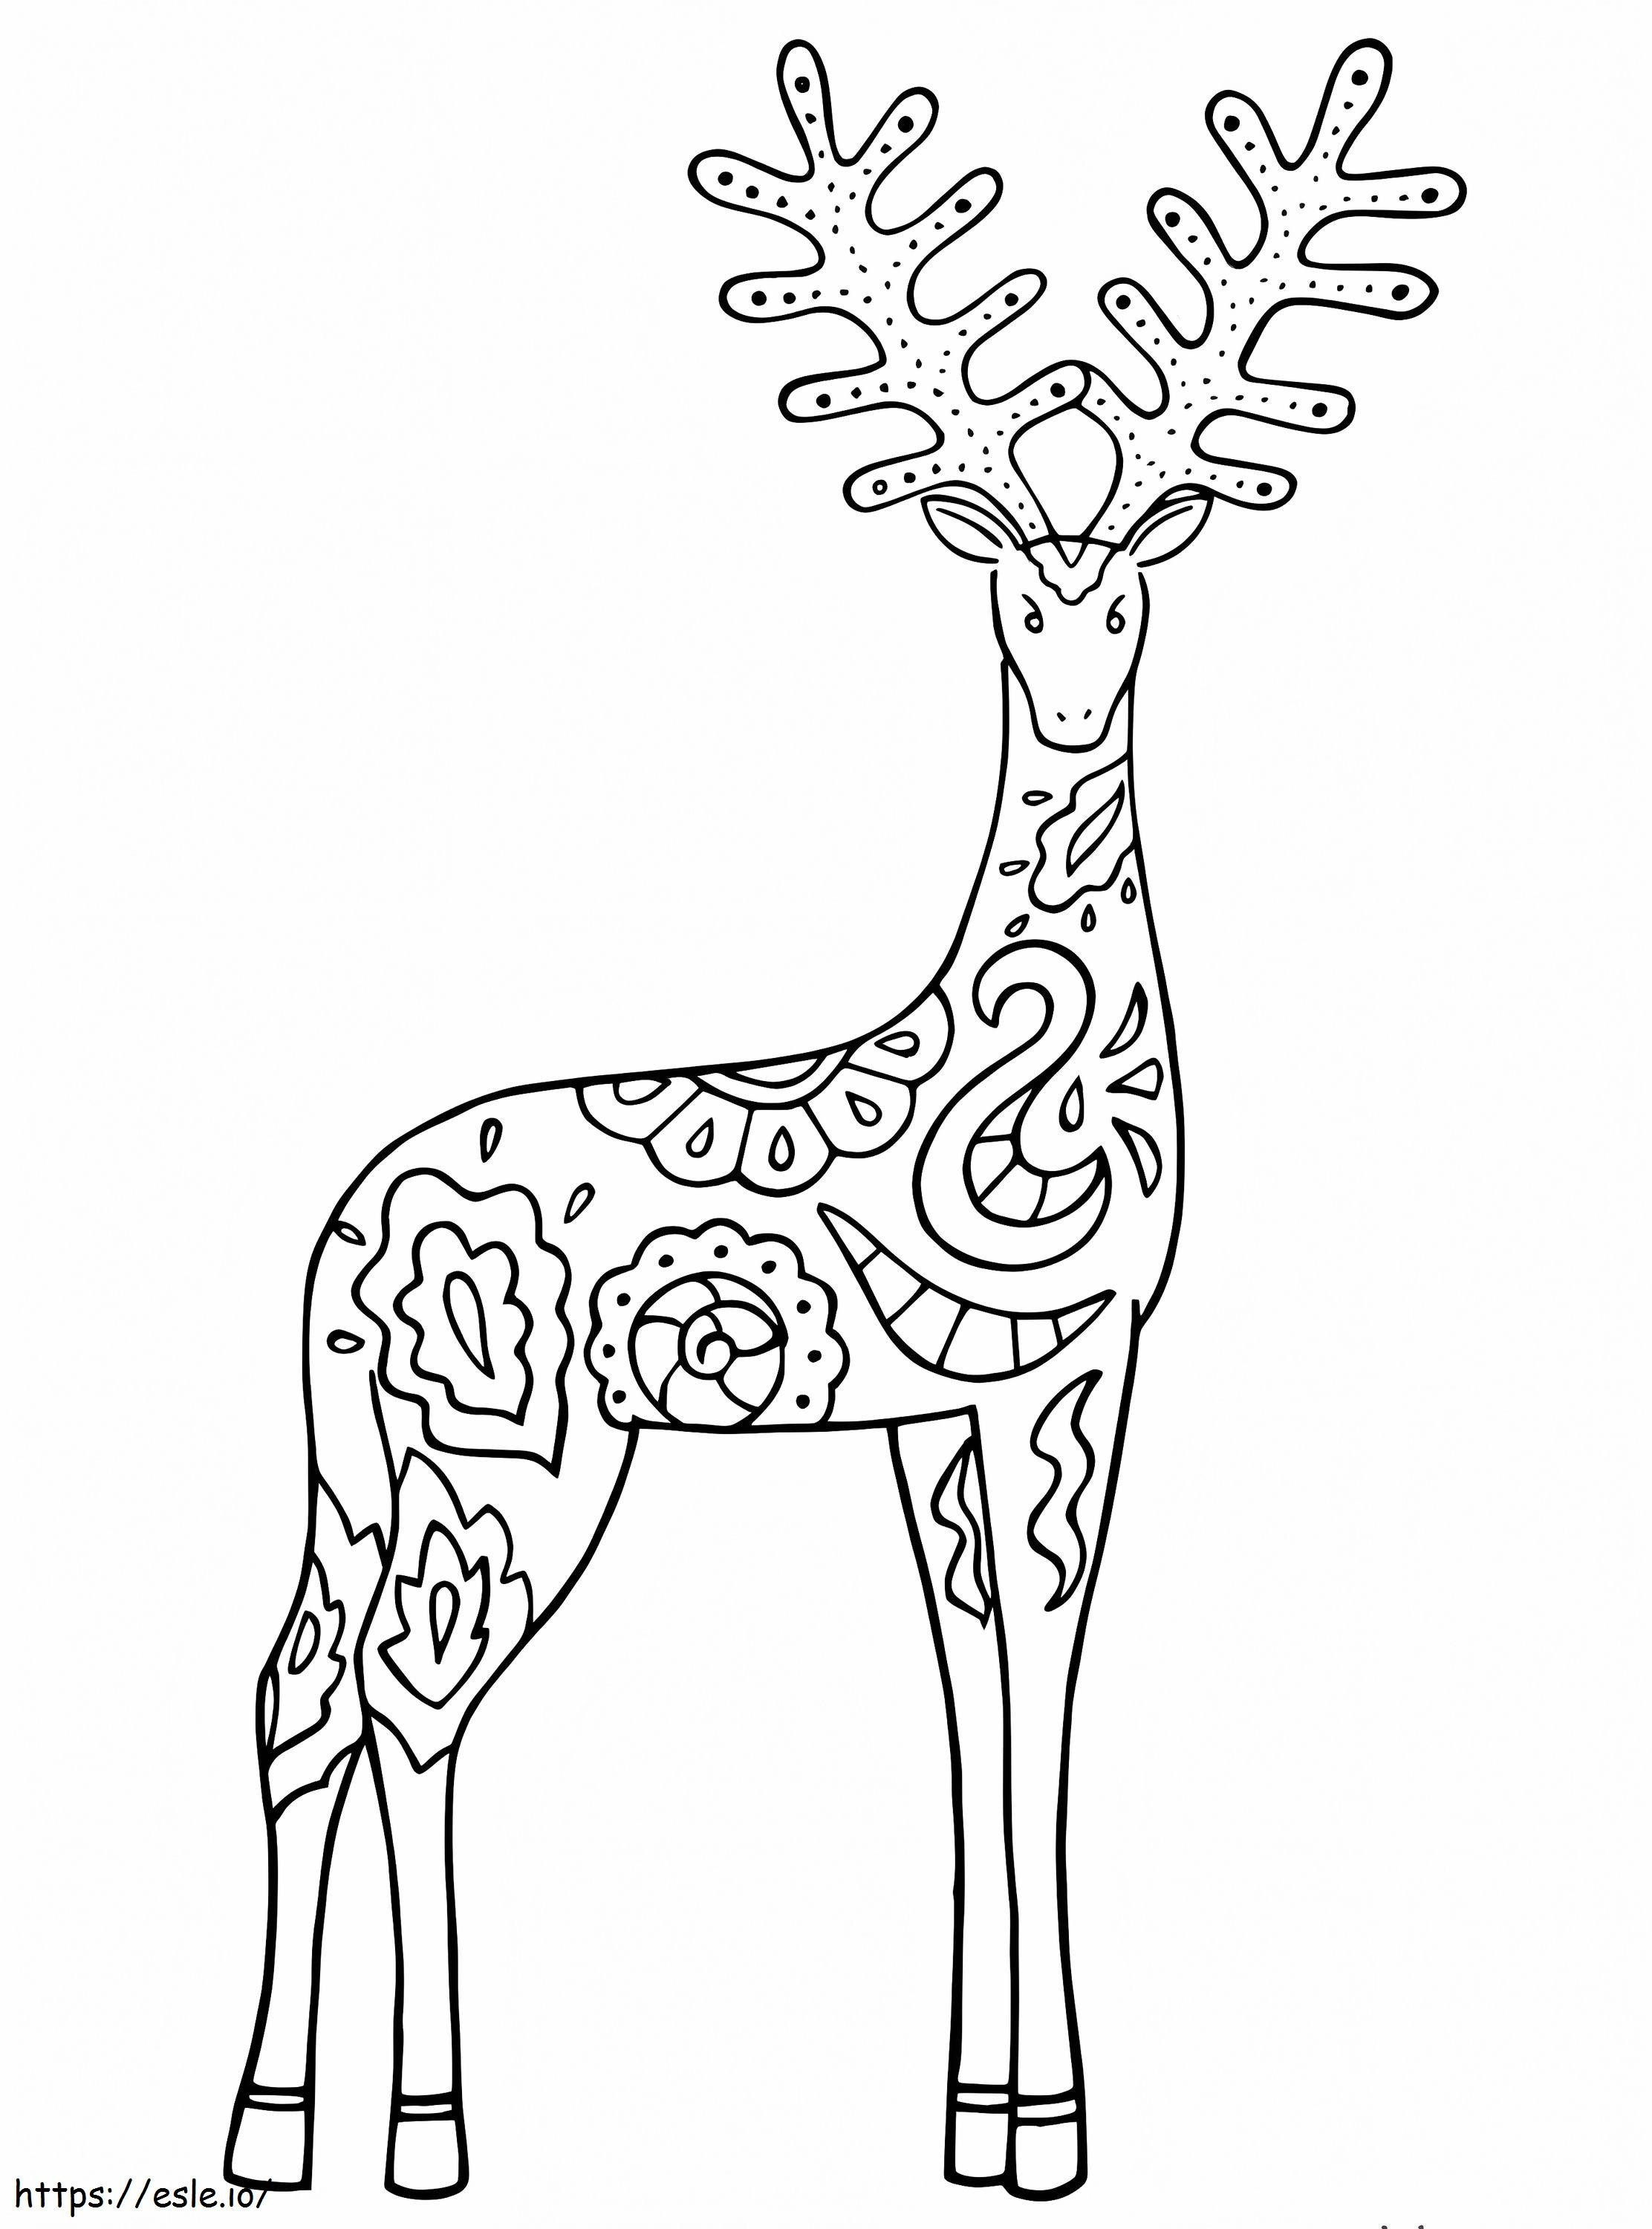 Fantastic Deer Alebrijes coloring page